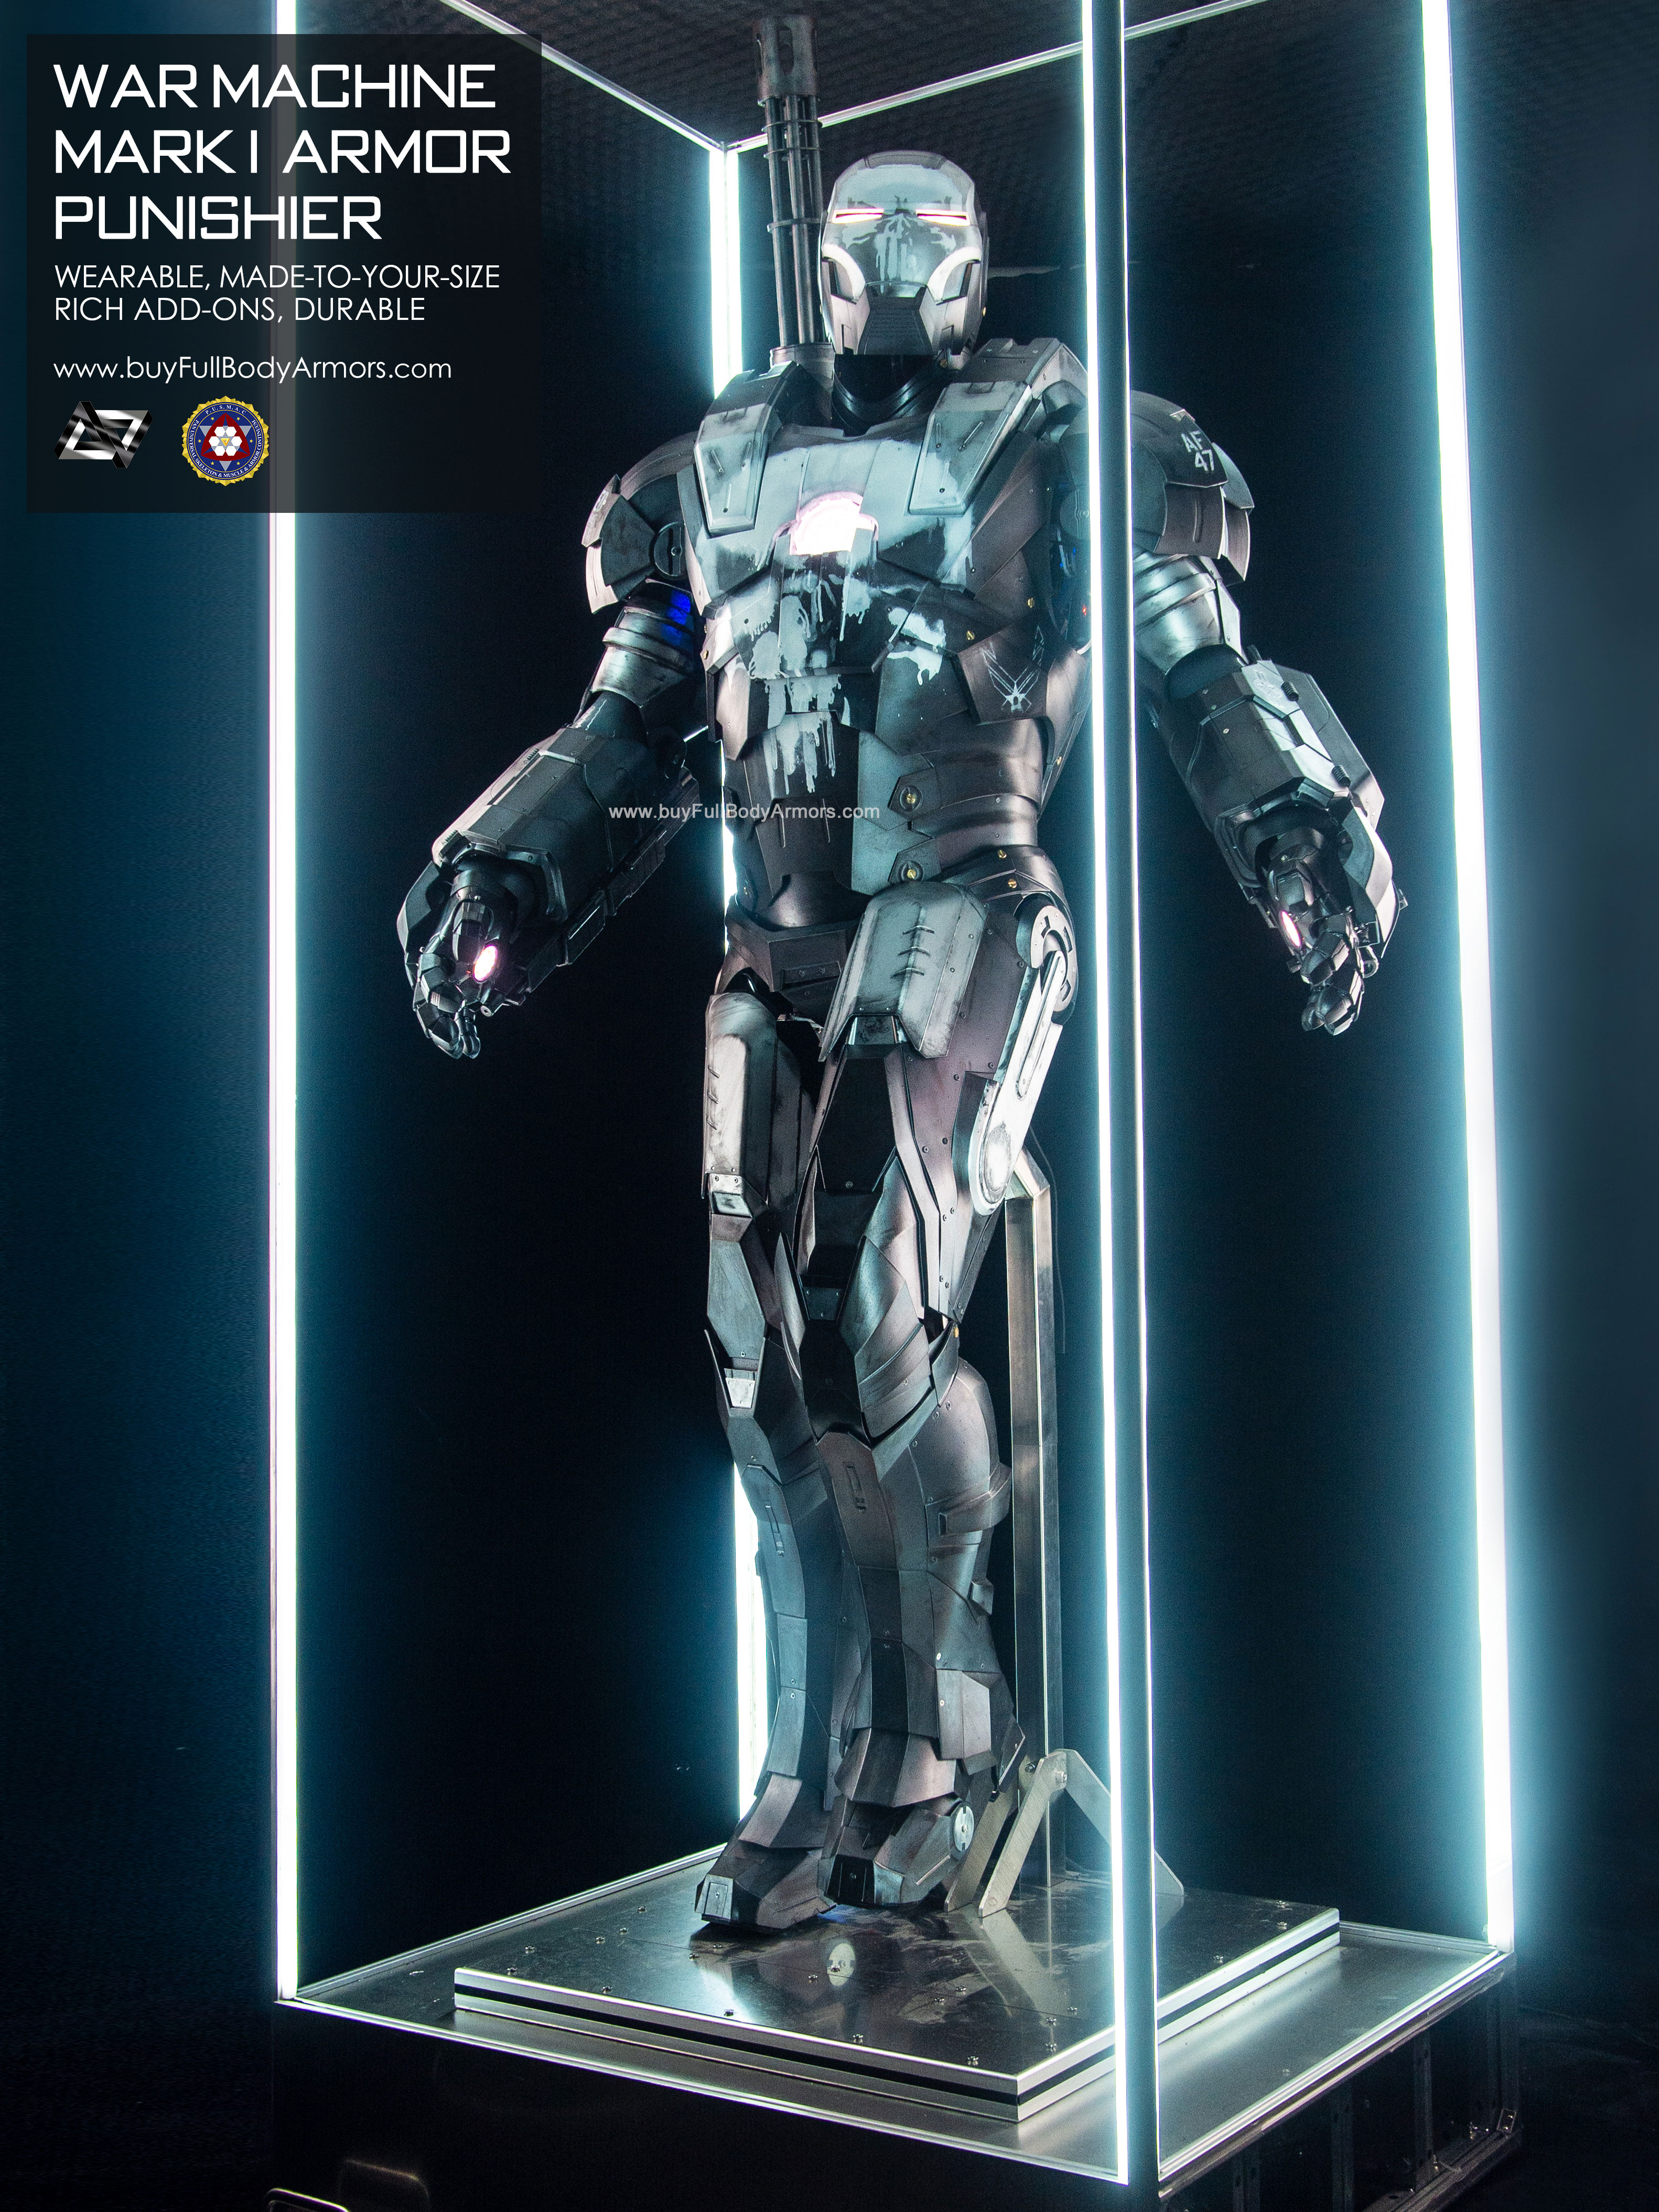 Wearable iron man suit War Machine Mark I Armor Suit punisher 2